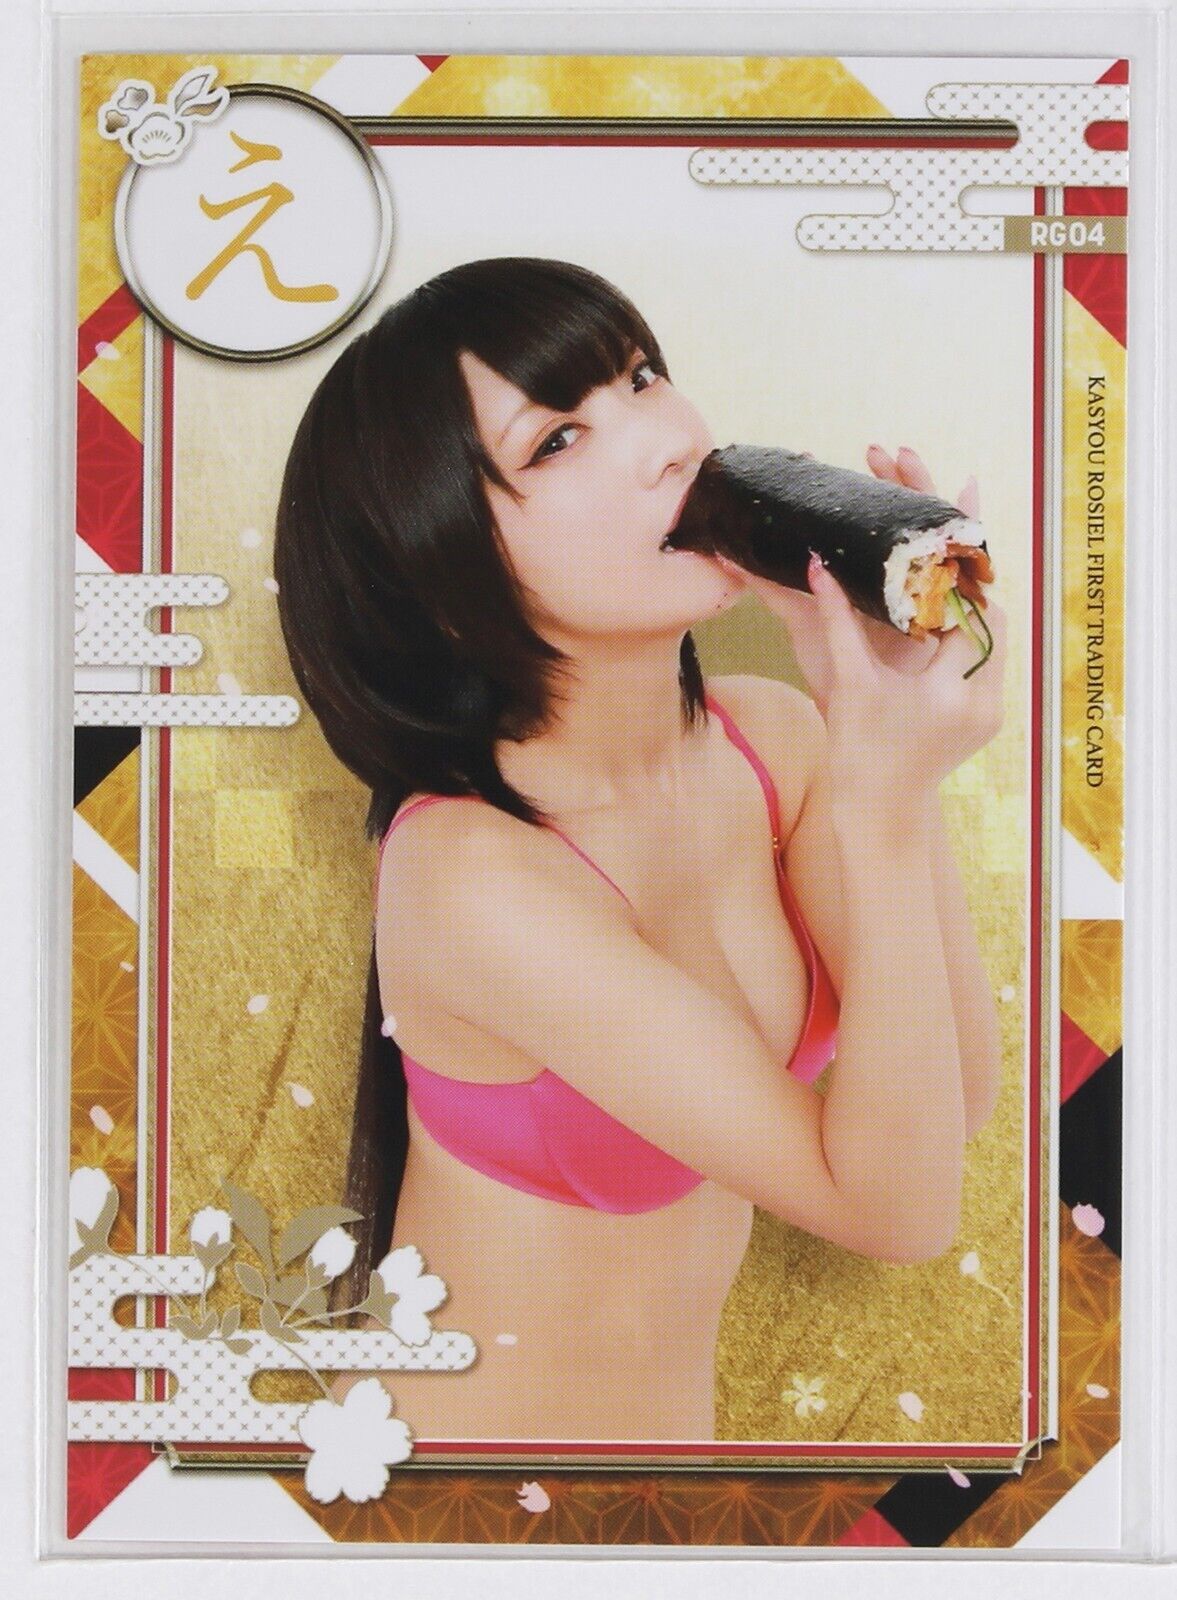 KASYOU ROSIEL RG04 - Japanese  Bikini Model & Cosplayer - FIRST TRADING CARD